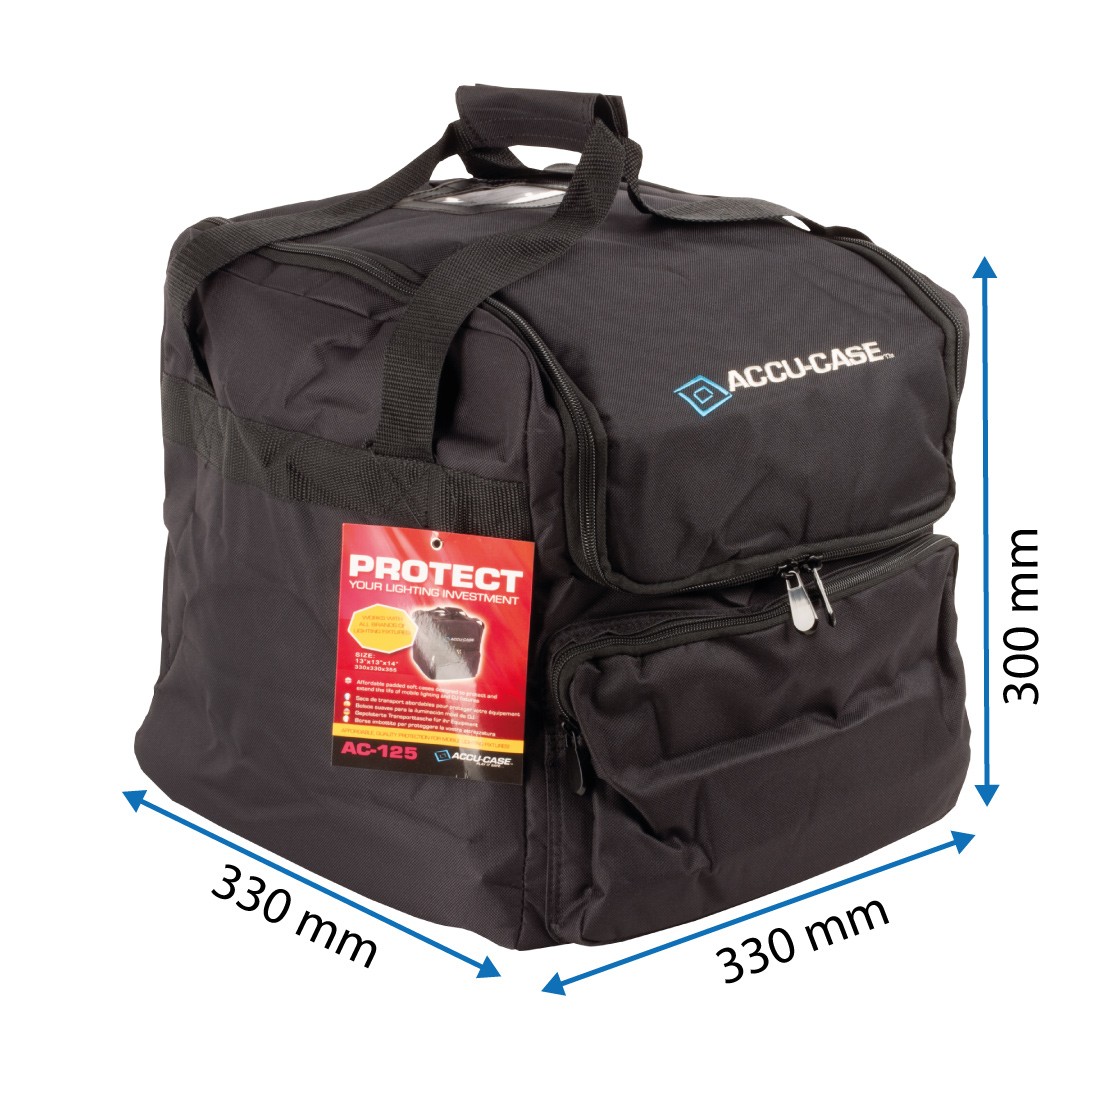 Arriba Cases AC-125 13 x 13 x 14 Lighting Bag Value Bundle 3-pack 